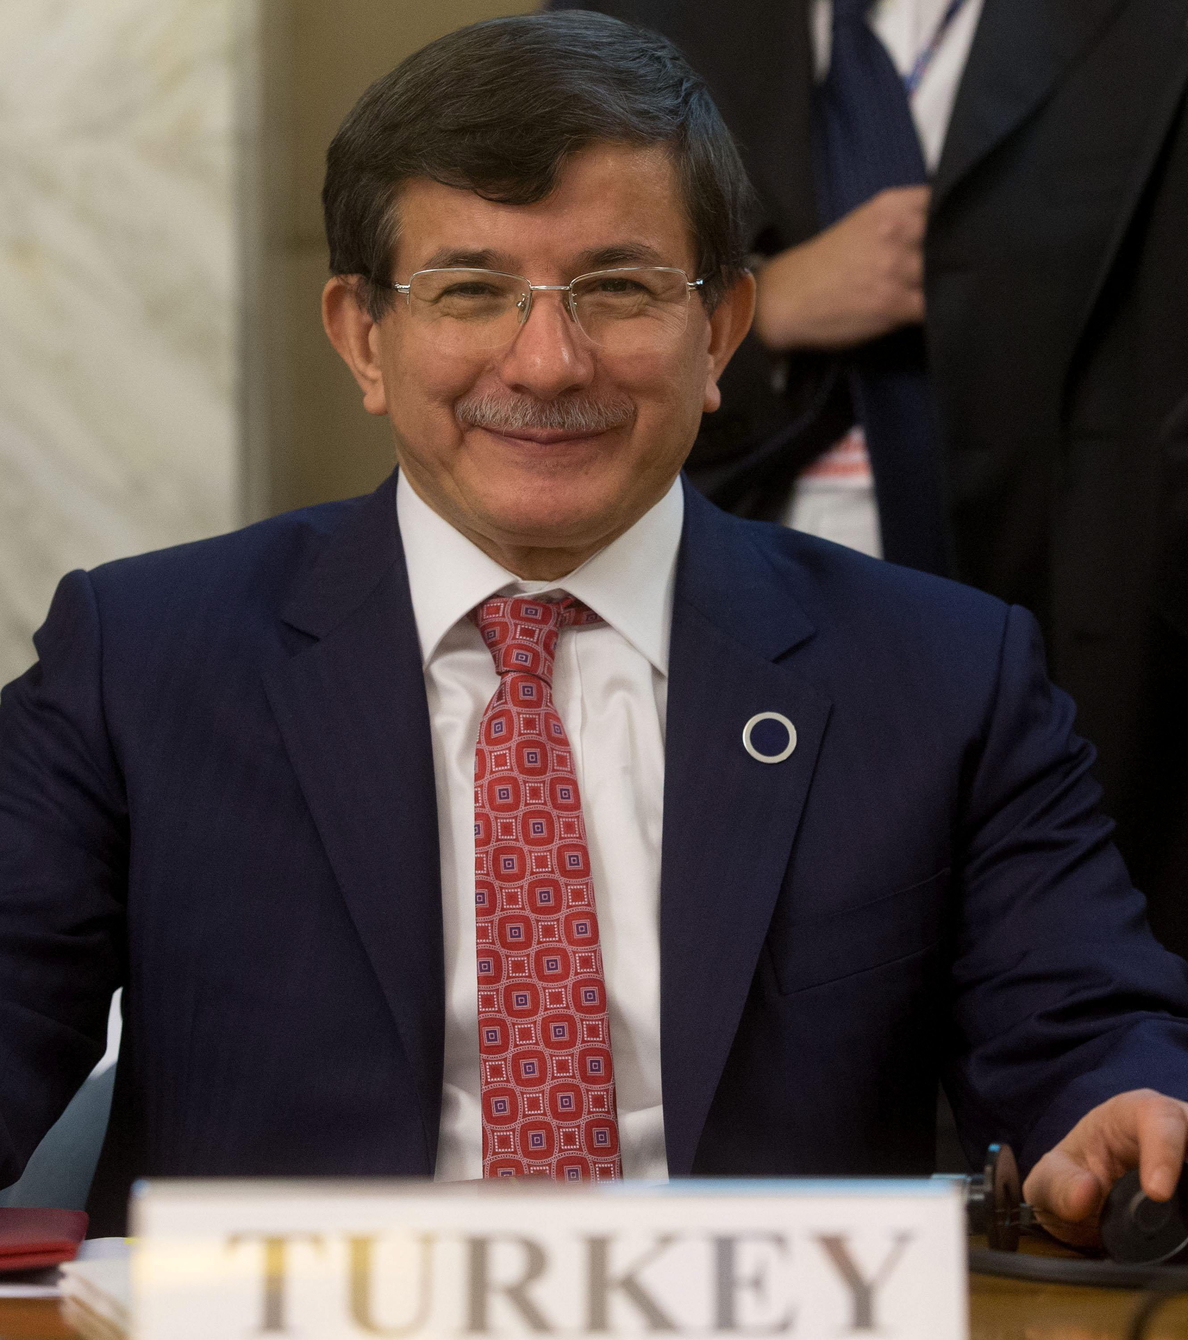 El gubernamental AKP nombra a Davutoglu líder y próximo primer ministro turco